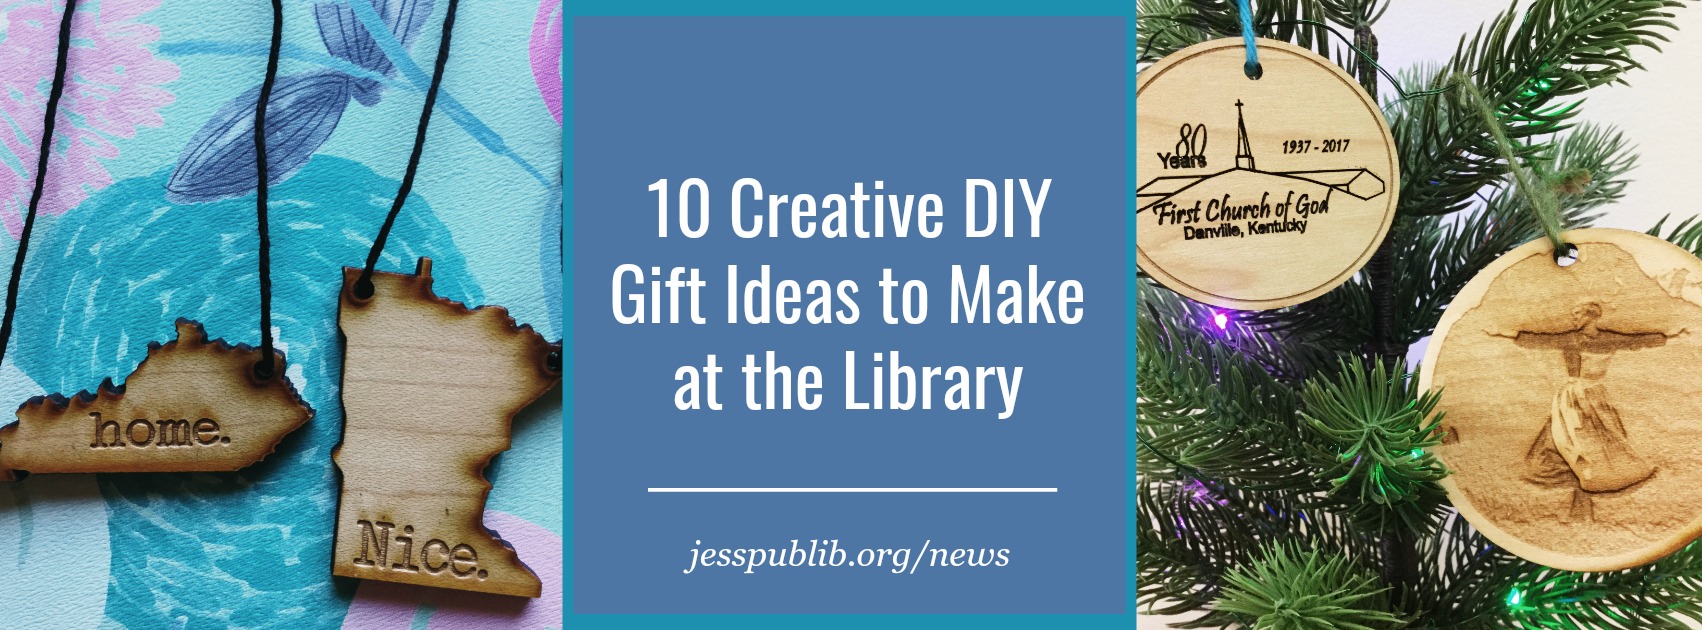 10 Creative Gift Ideas blog header